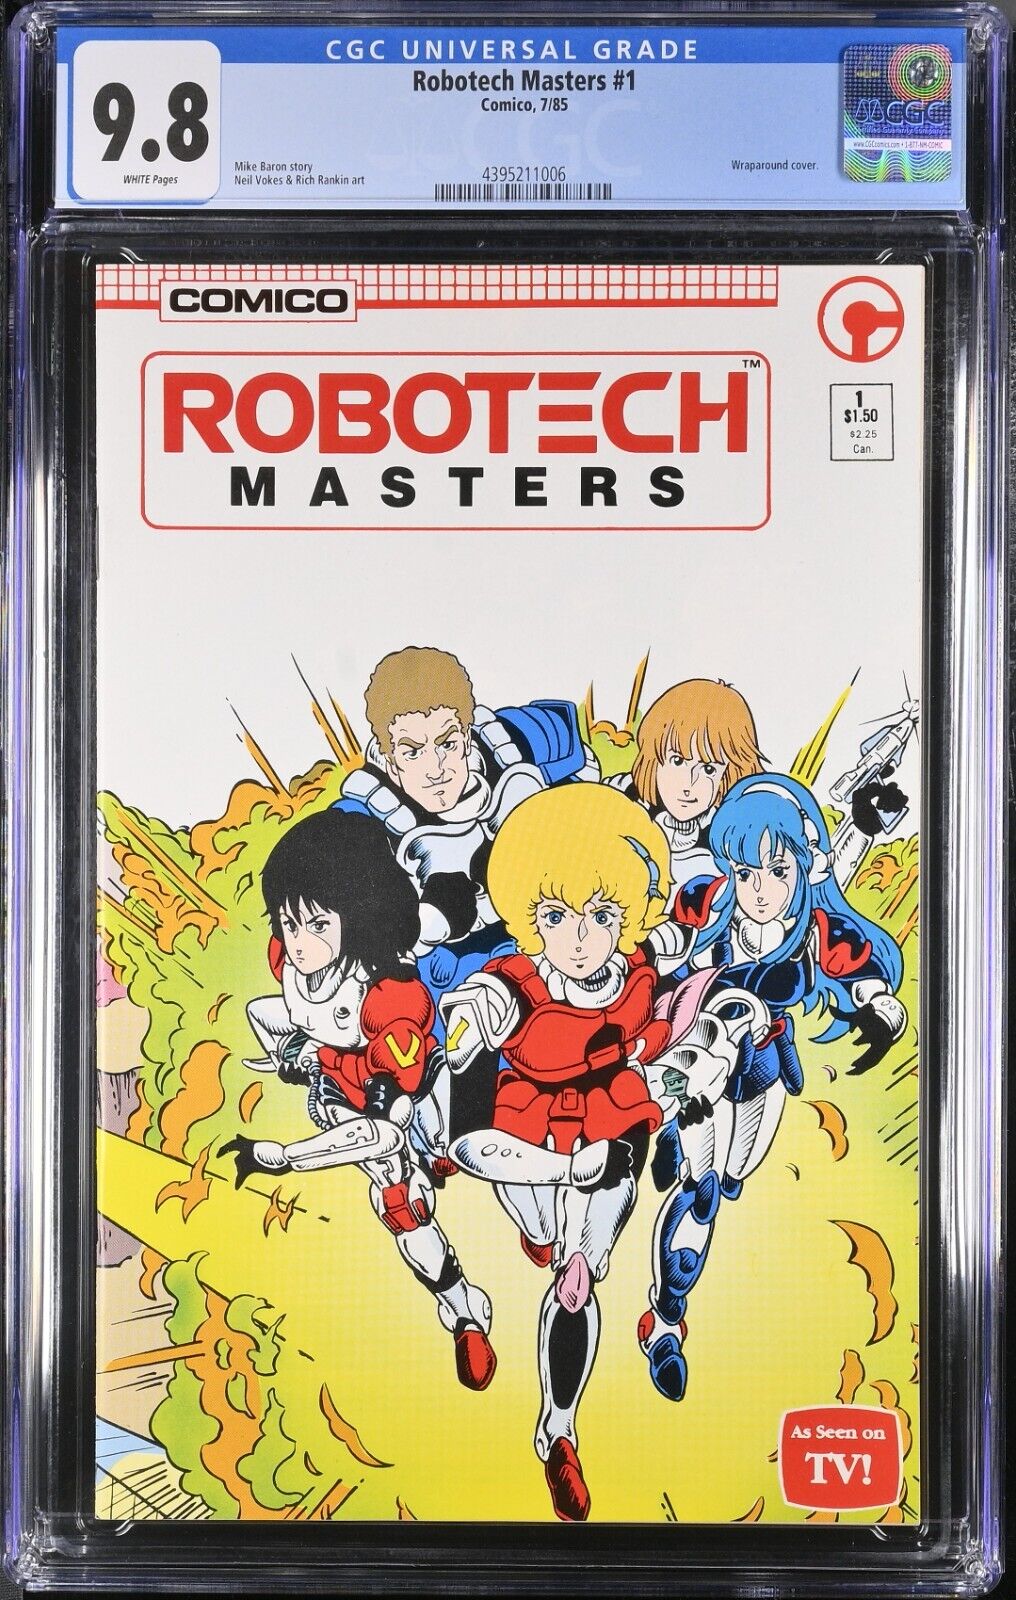 ROBOTECH: MASTERS #1 - CGC 9.8 - WP - NM/MT - WRAPAROUND COVER